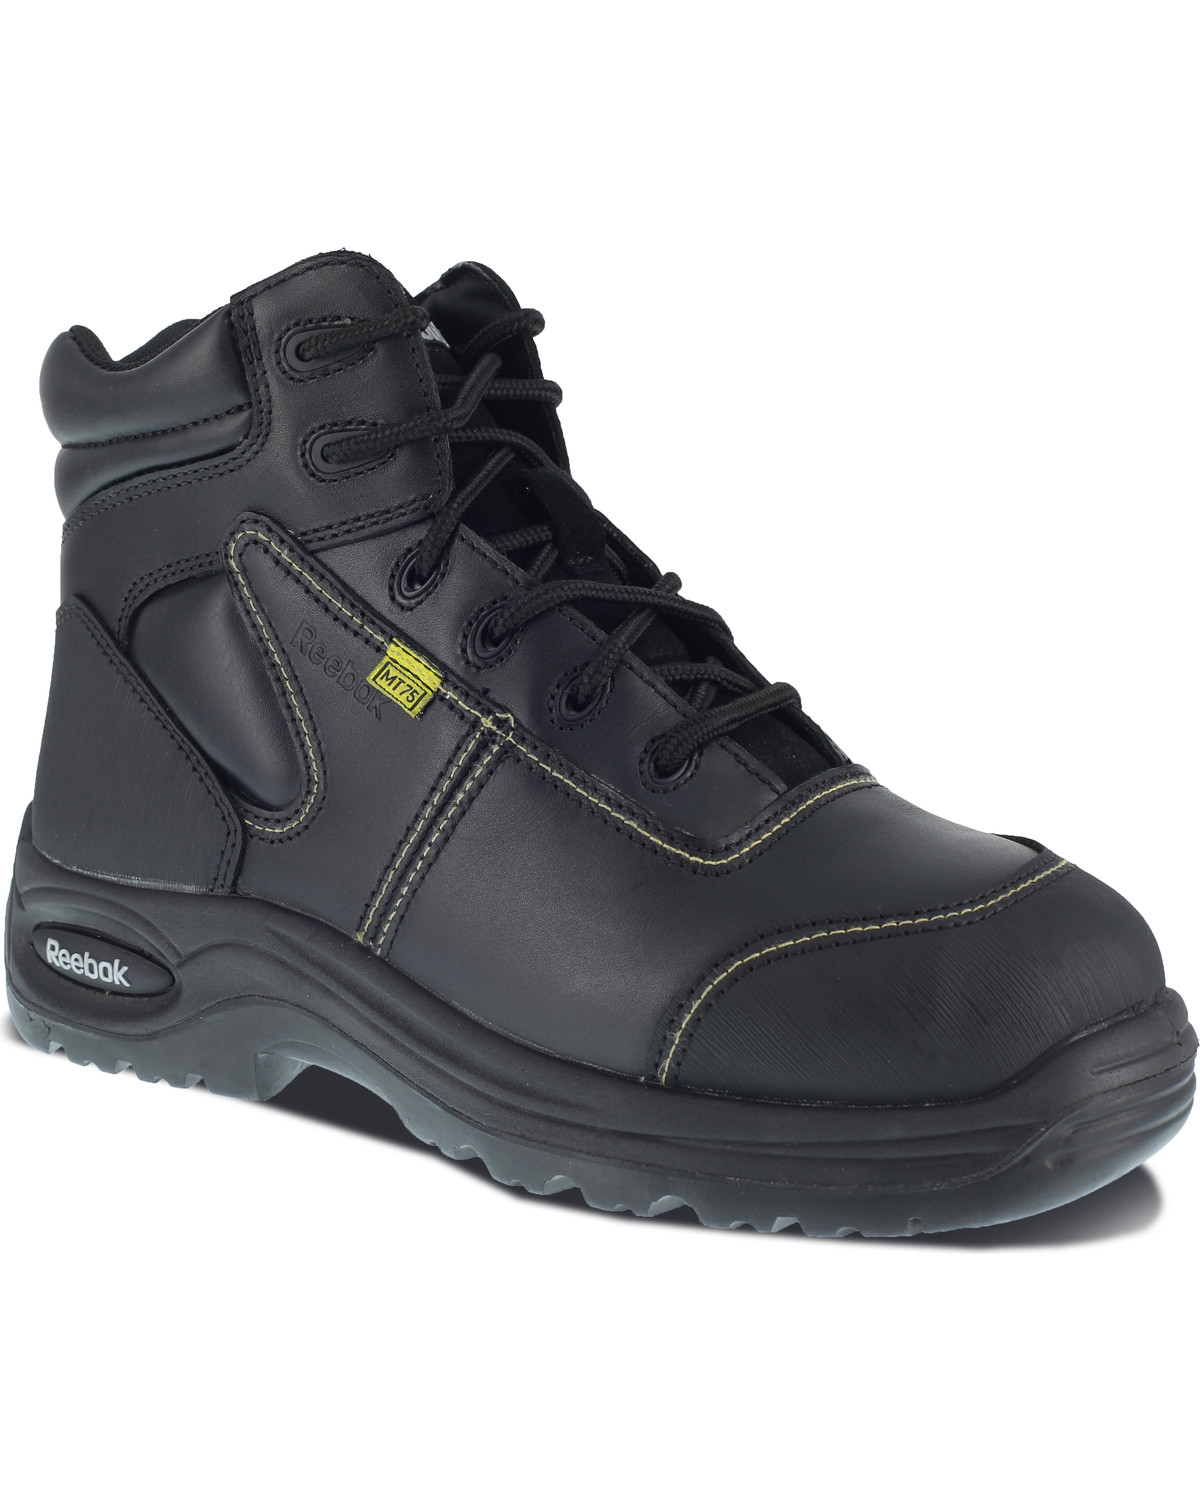 Reebok Men's Trainex 6" Lace-Up Internal Met Guard Work Boots - Composite Toe